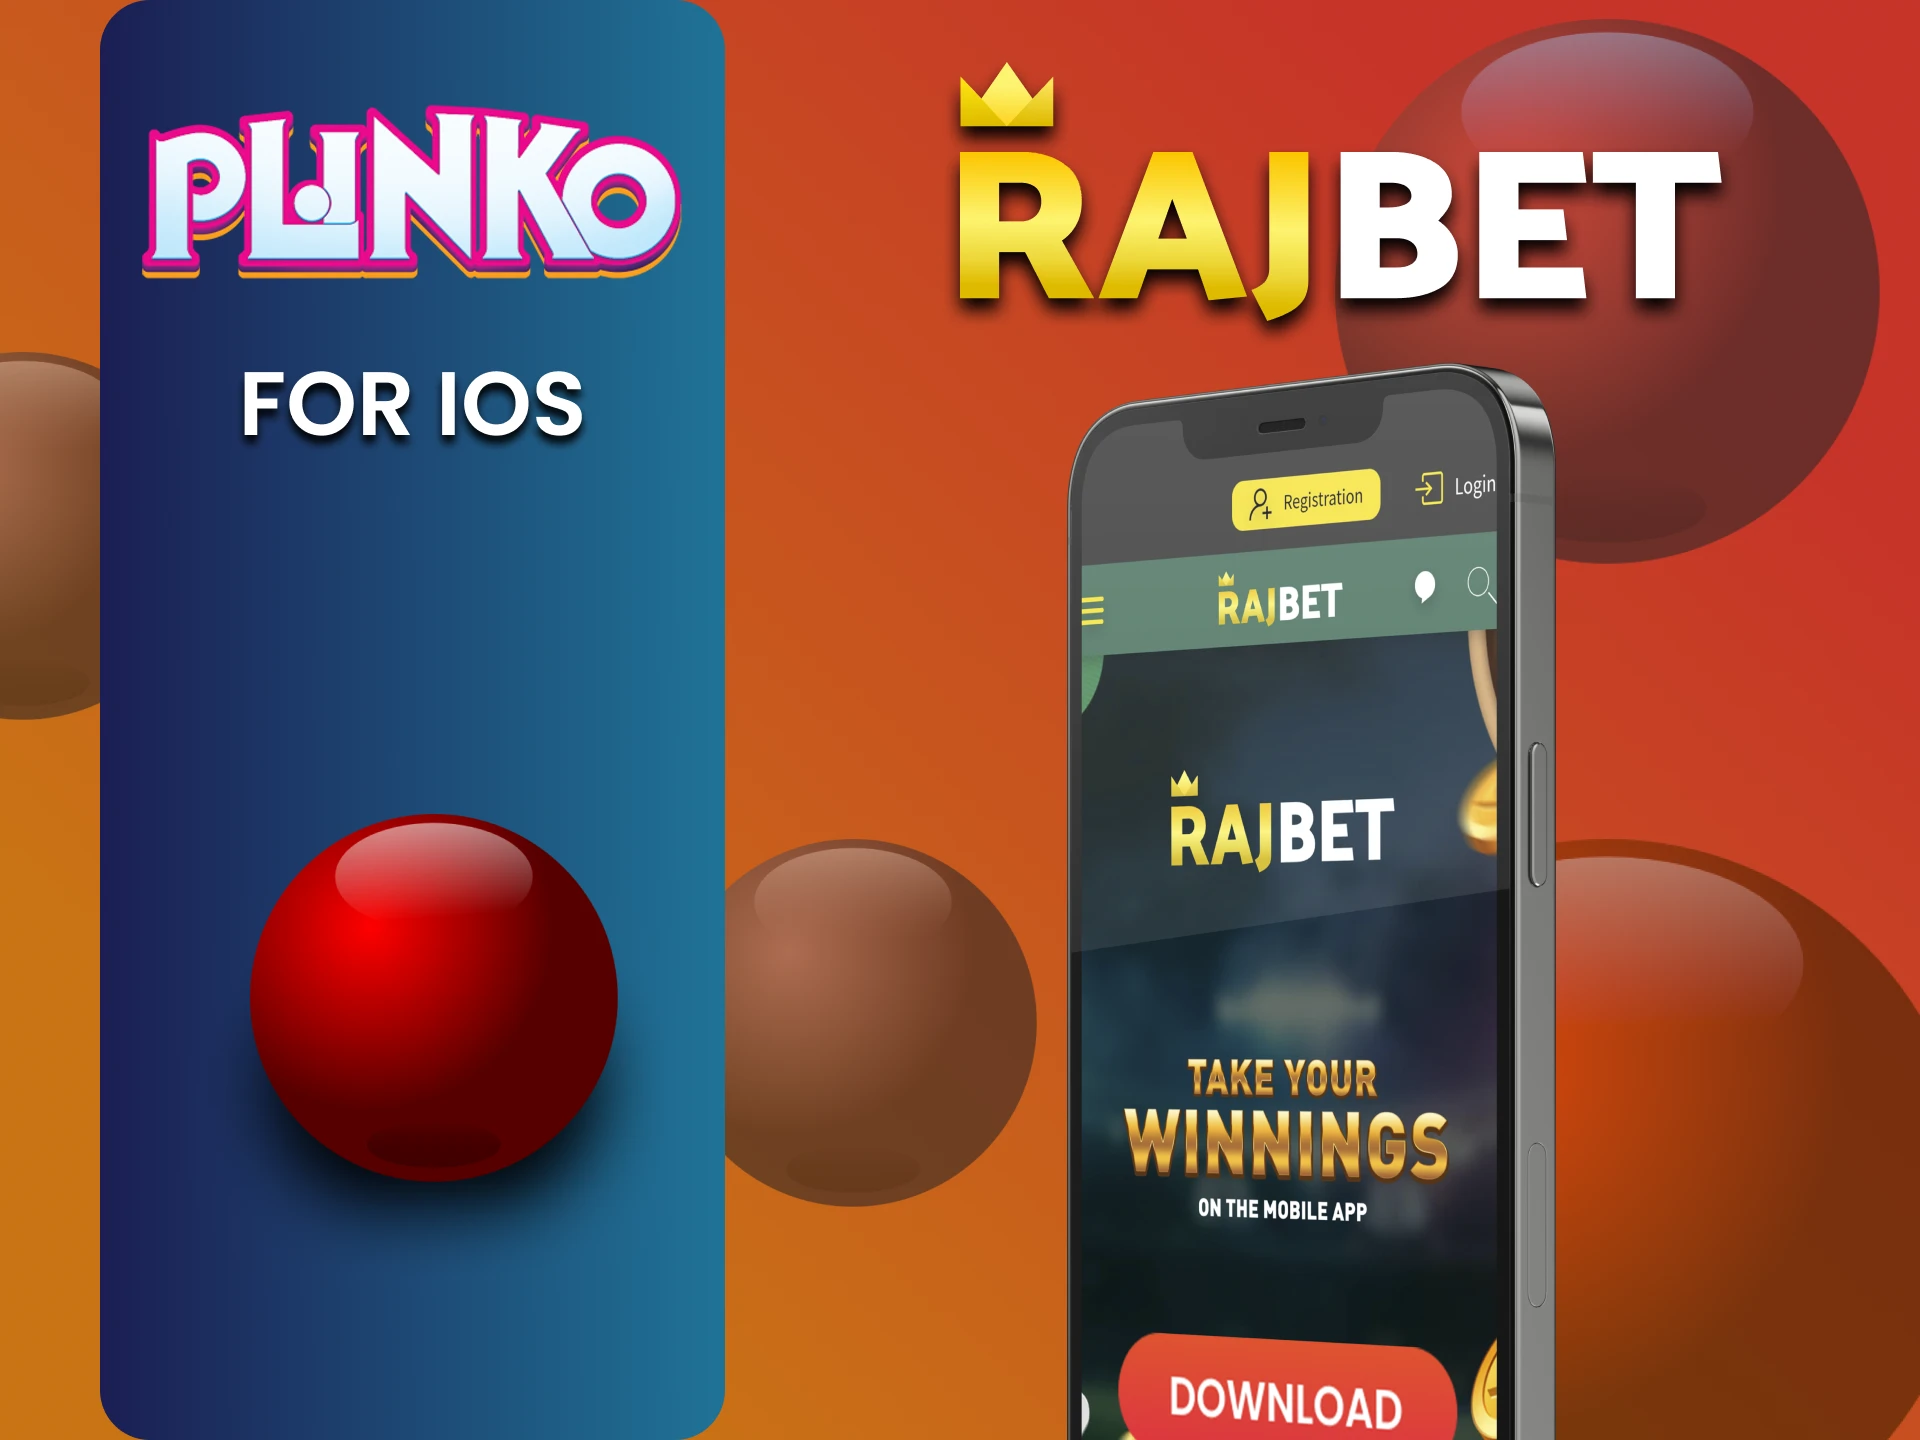 Install the Rajbet app on iOS to play Plinko.